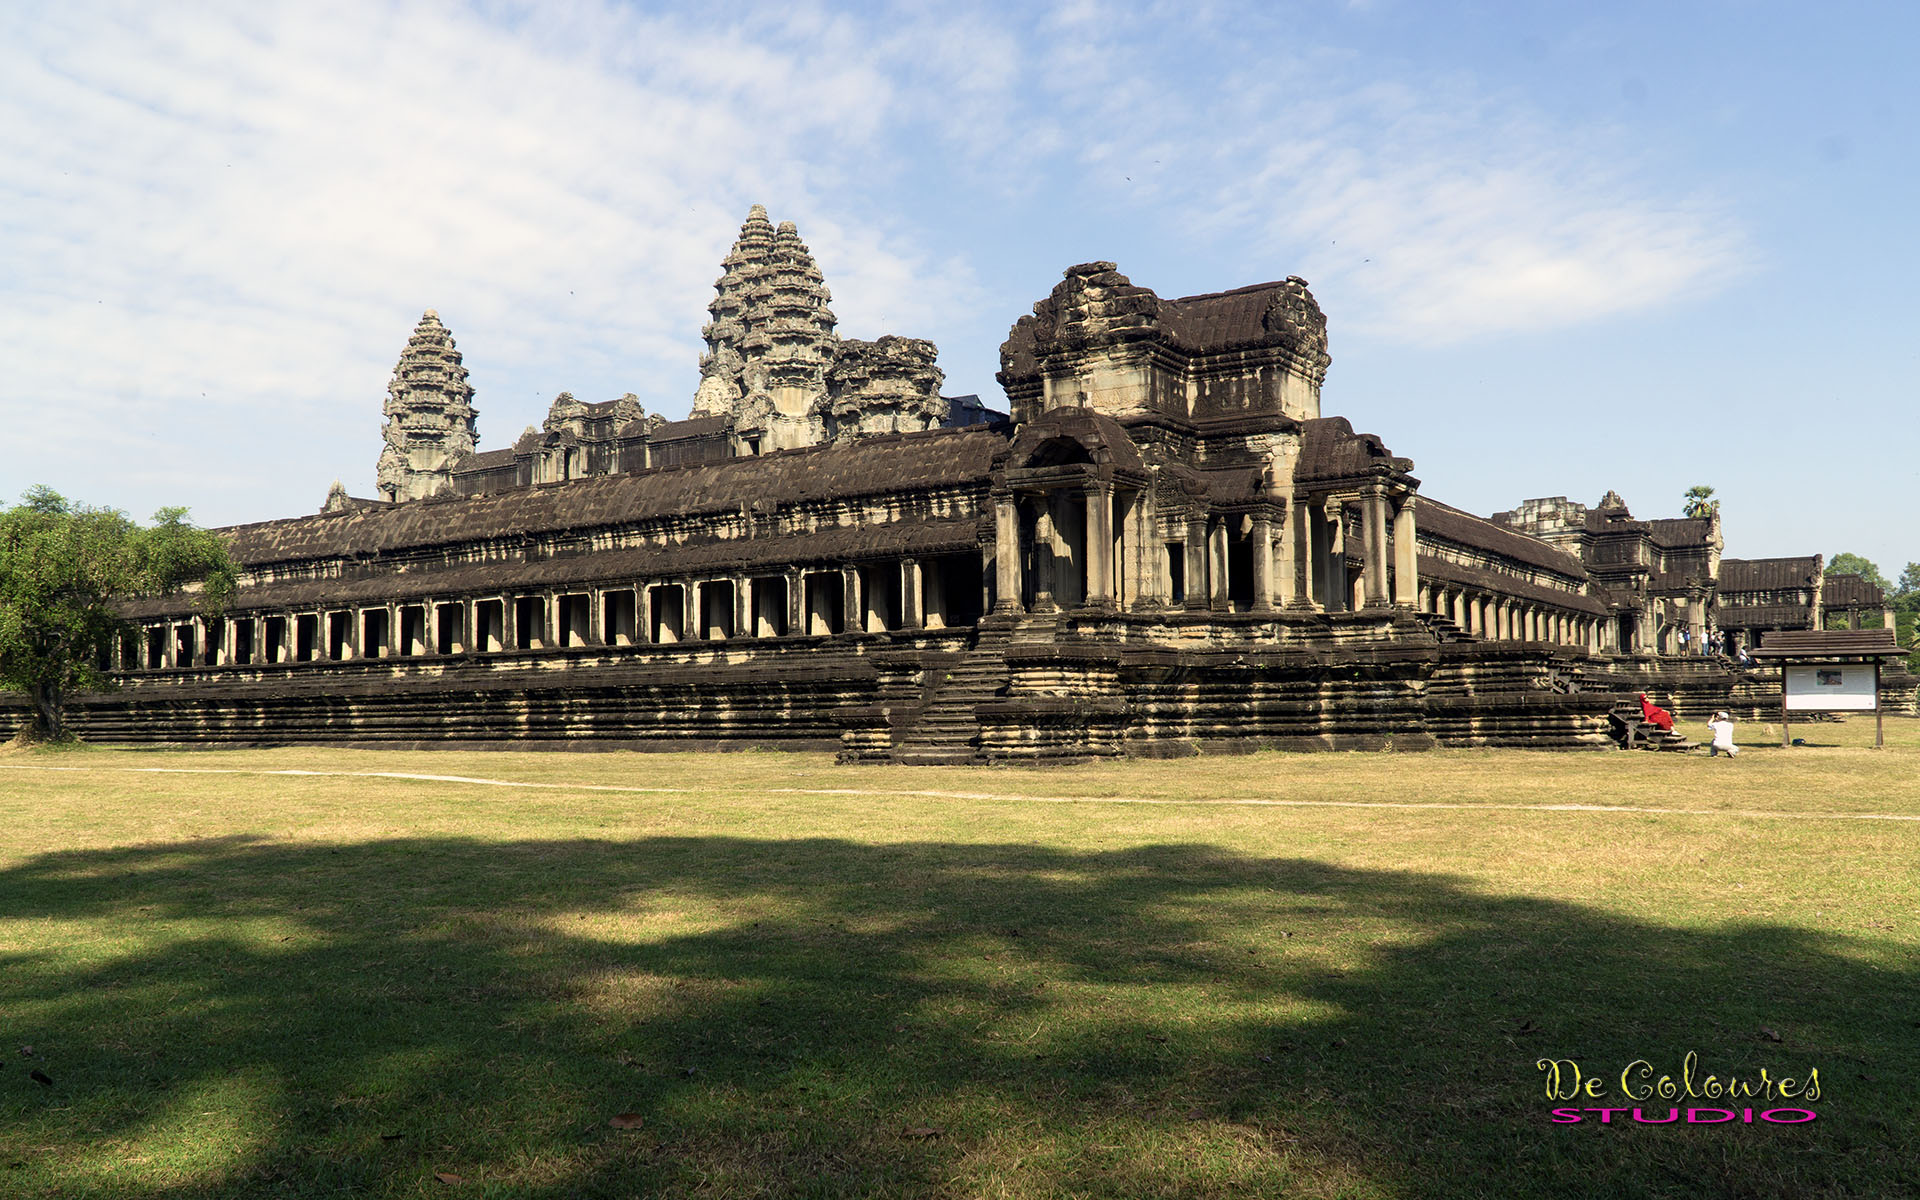 Angkor Wat - The Temple